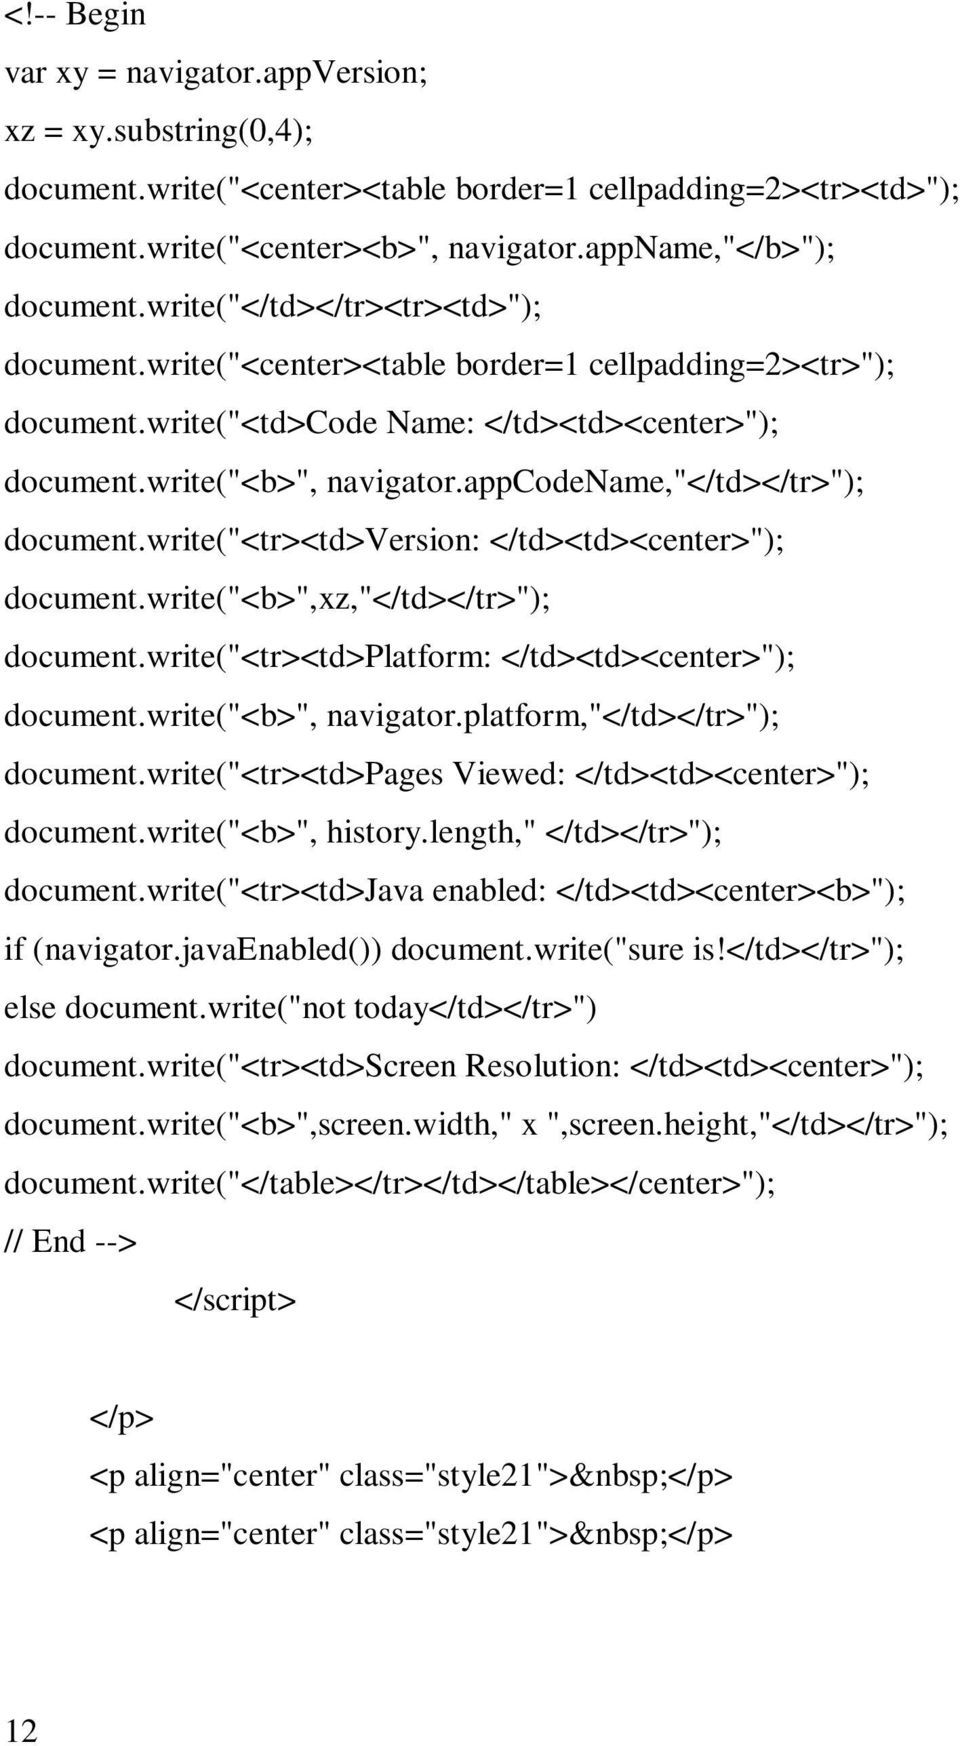 appcodename,"</td></tr>"); document.write("<tr><td>version: </td><td><center>"); document.write("<b>",xz,"</td></tr>"); document.write("<tr><td>platform: </td><td><center>"); document.